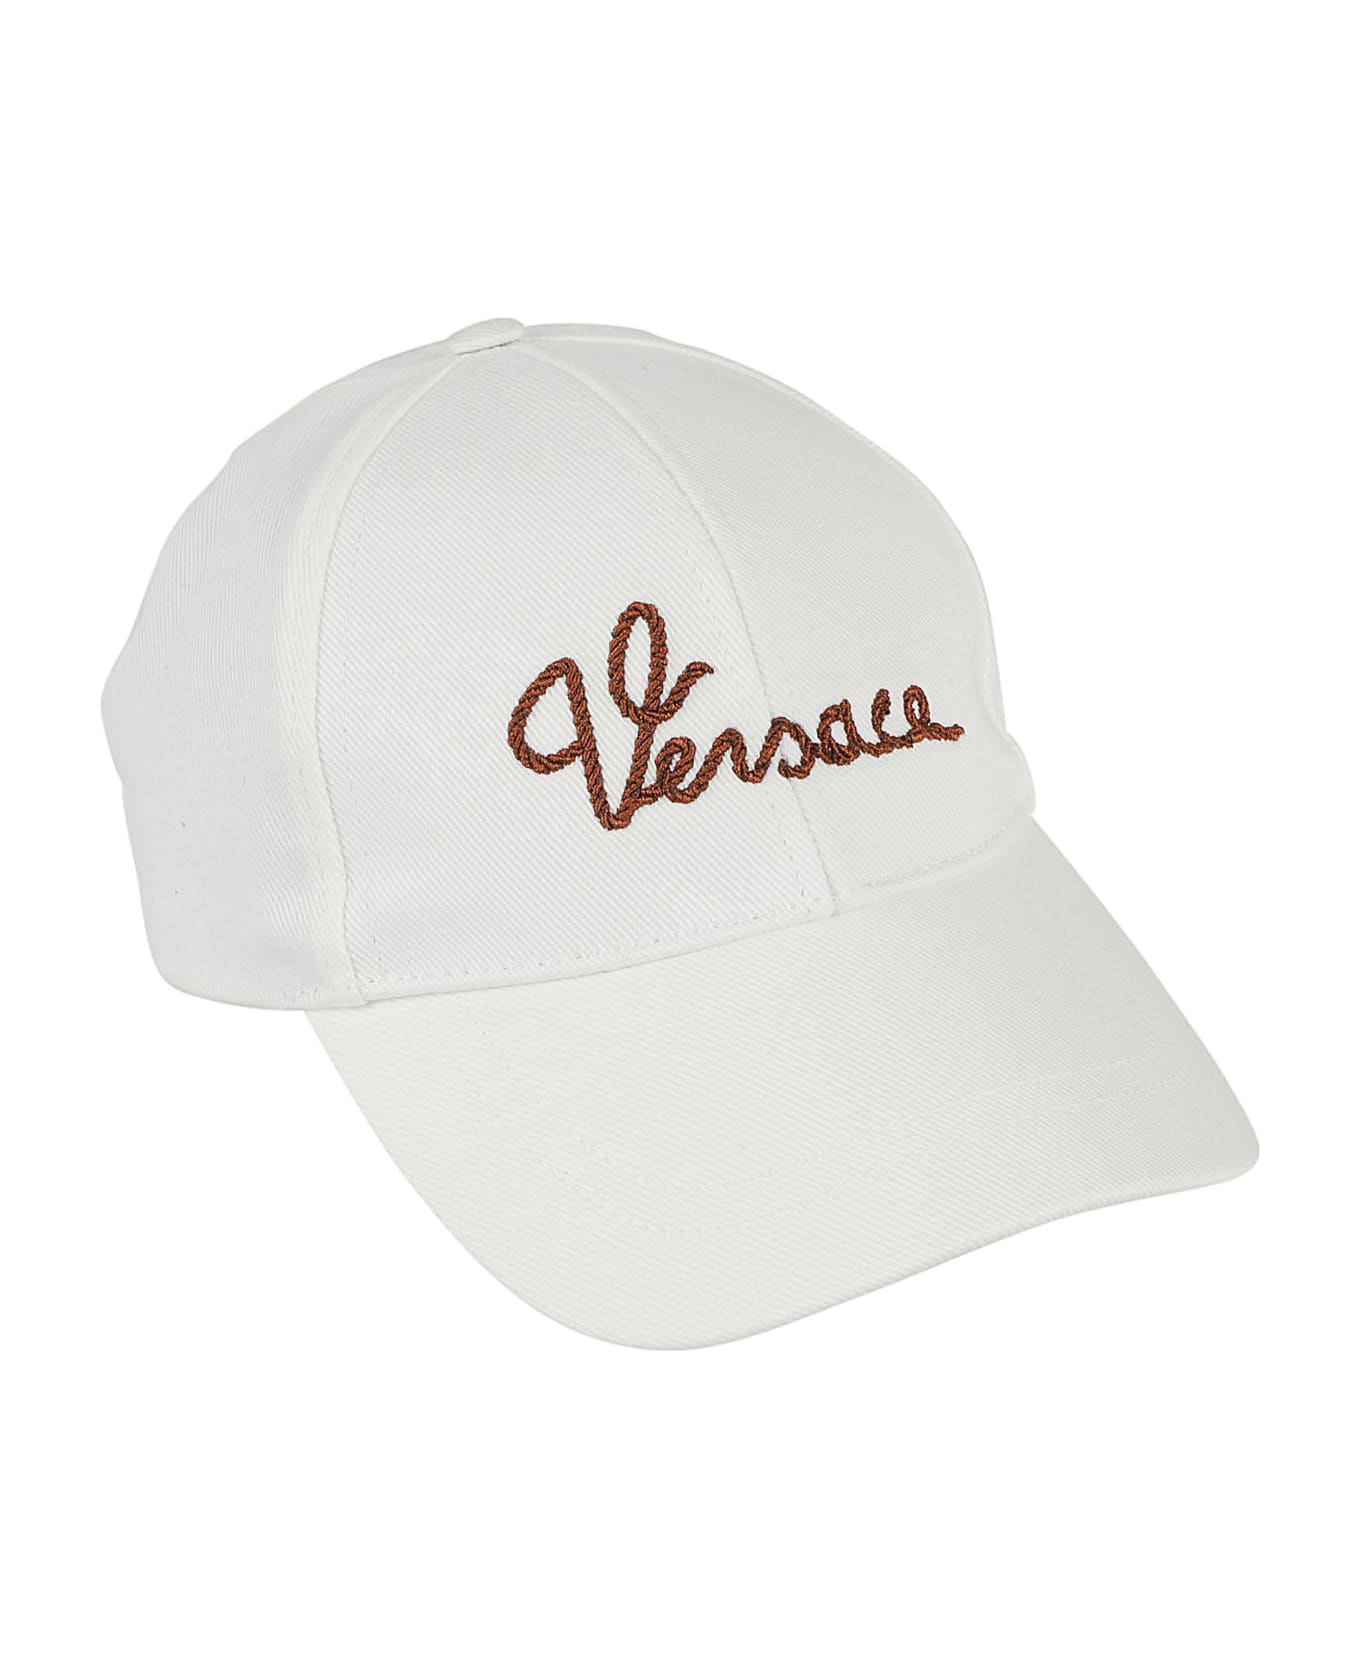 Versace Logo Embroidered Baseball Cap - White/Tabacco